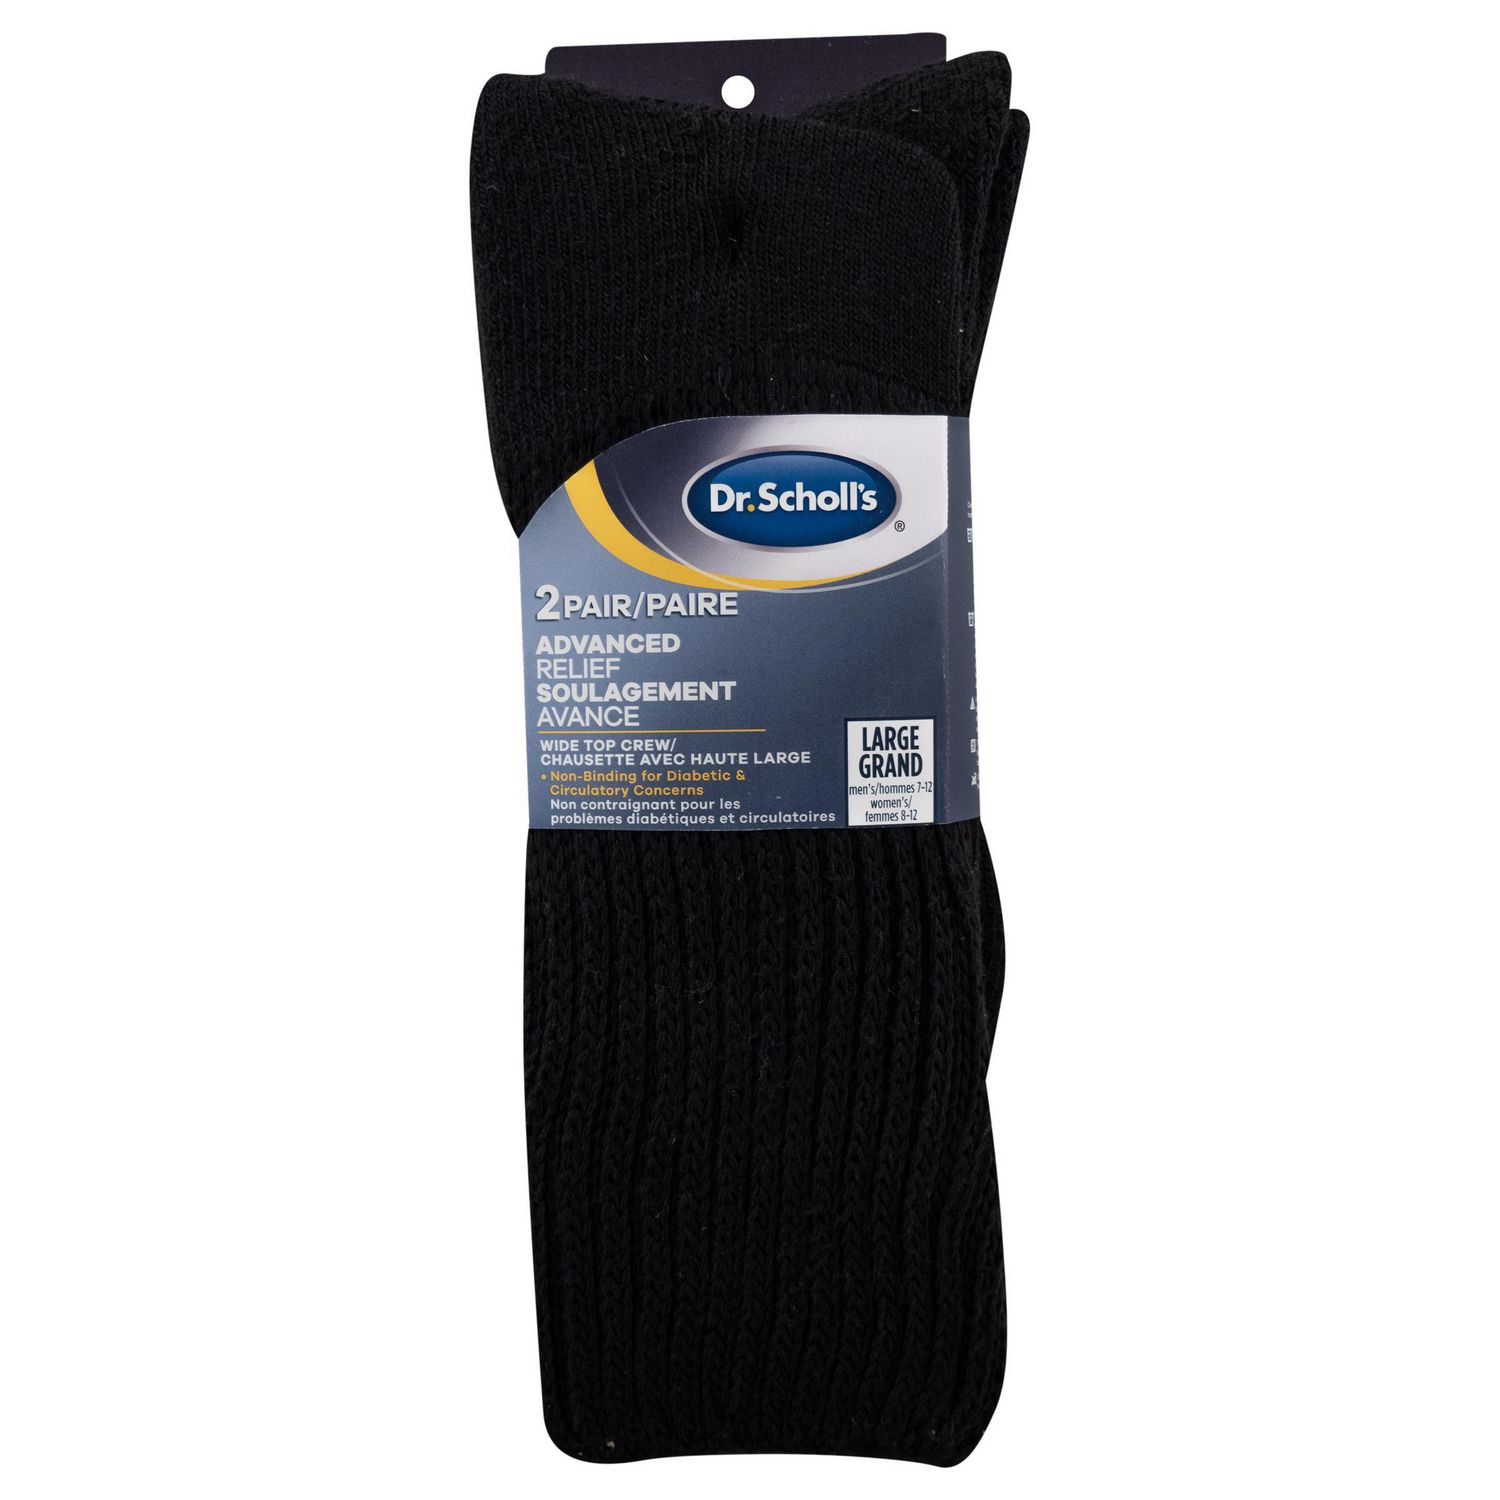 Scholls Womens Non-Binding Low Cut 4 Pack Casual Socks Dr